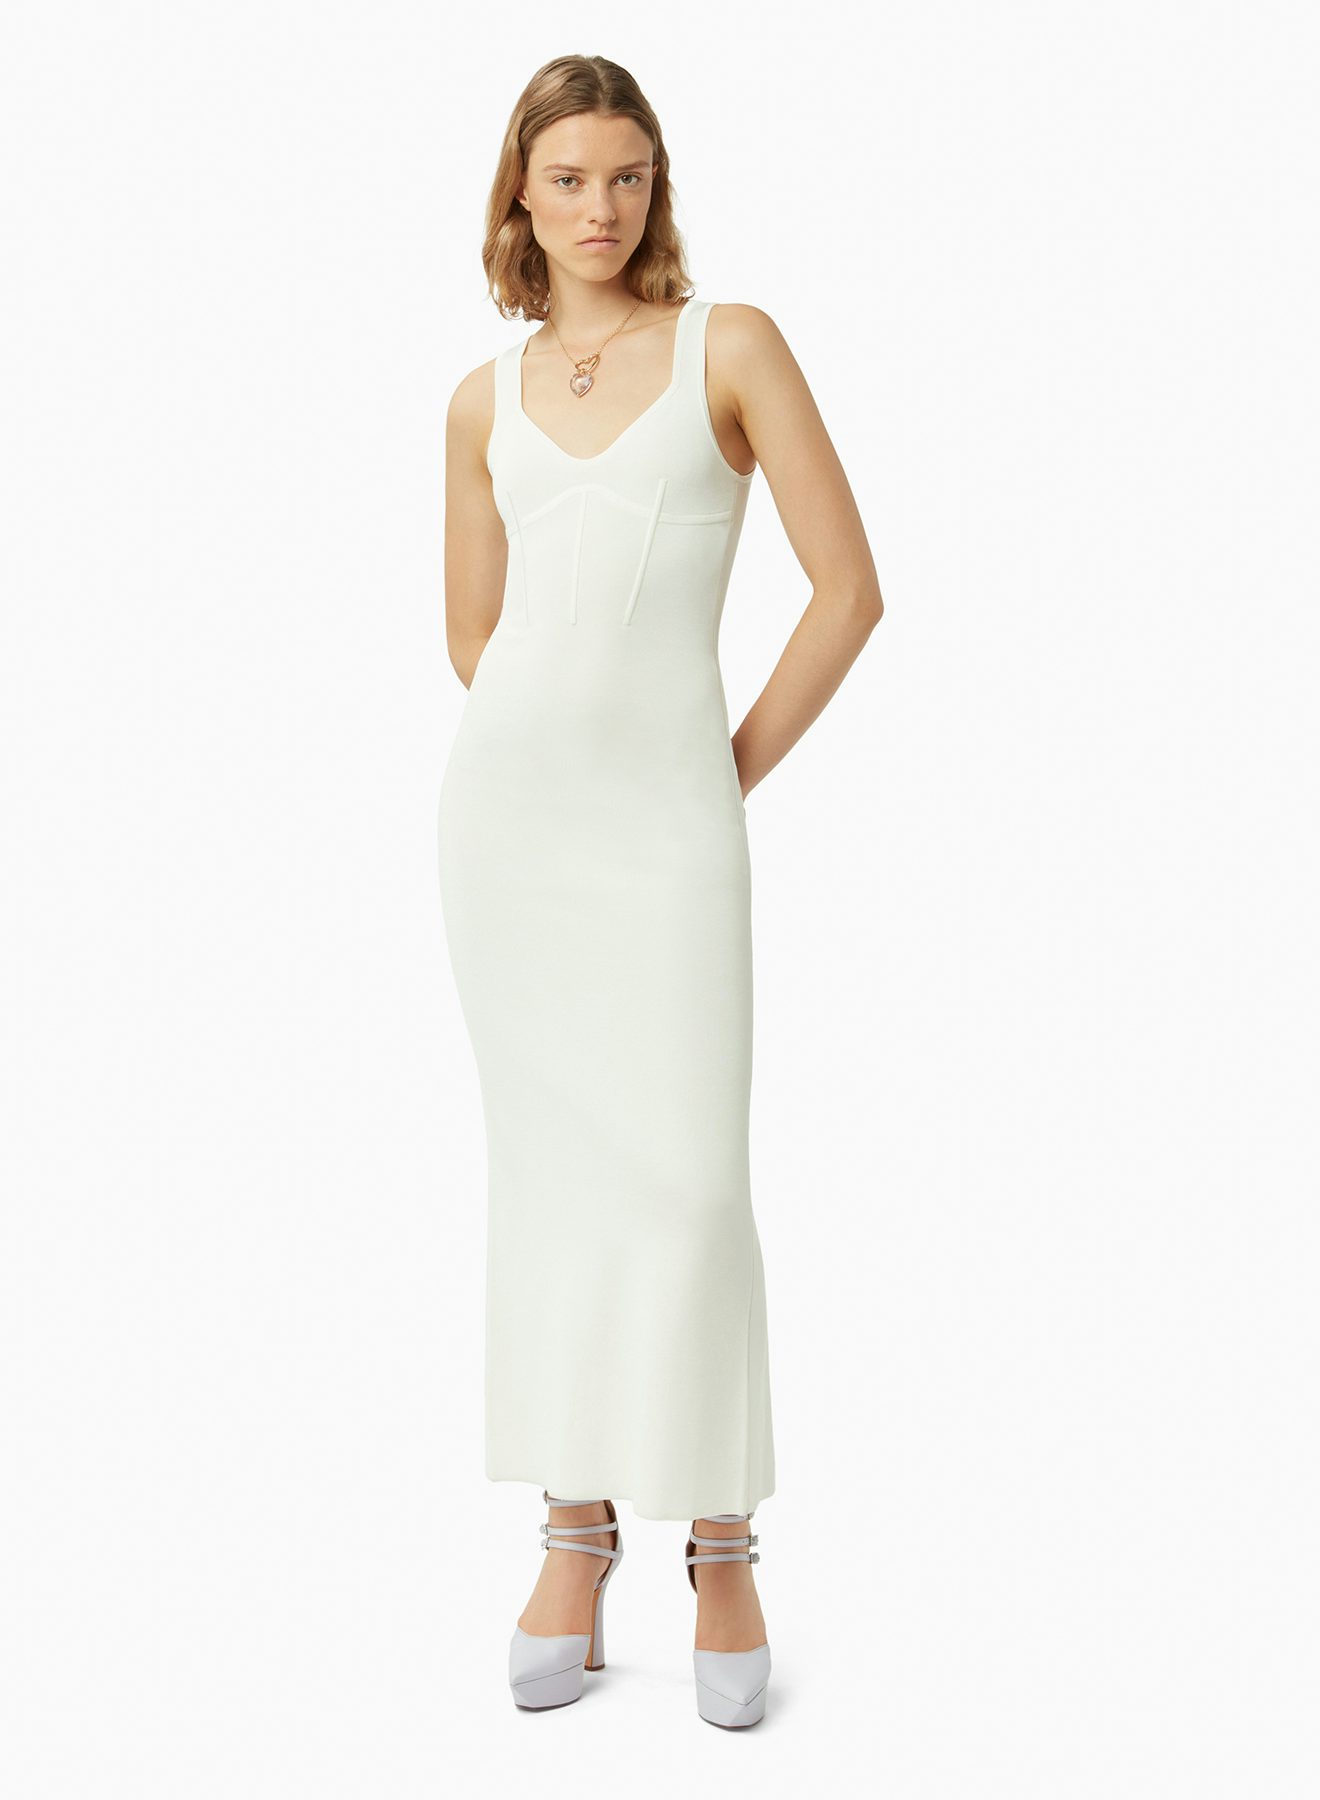 Corset detail dress in off white - Nina Ricci